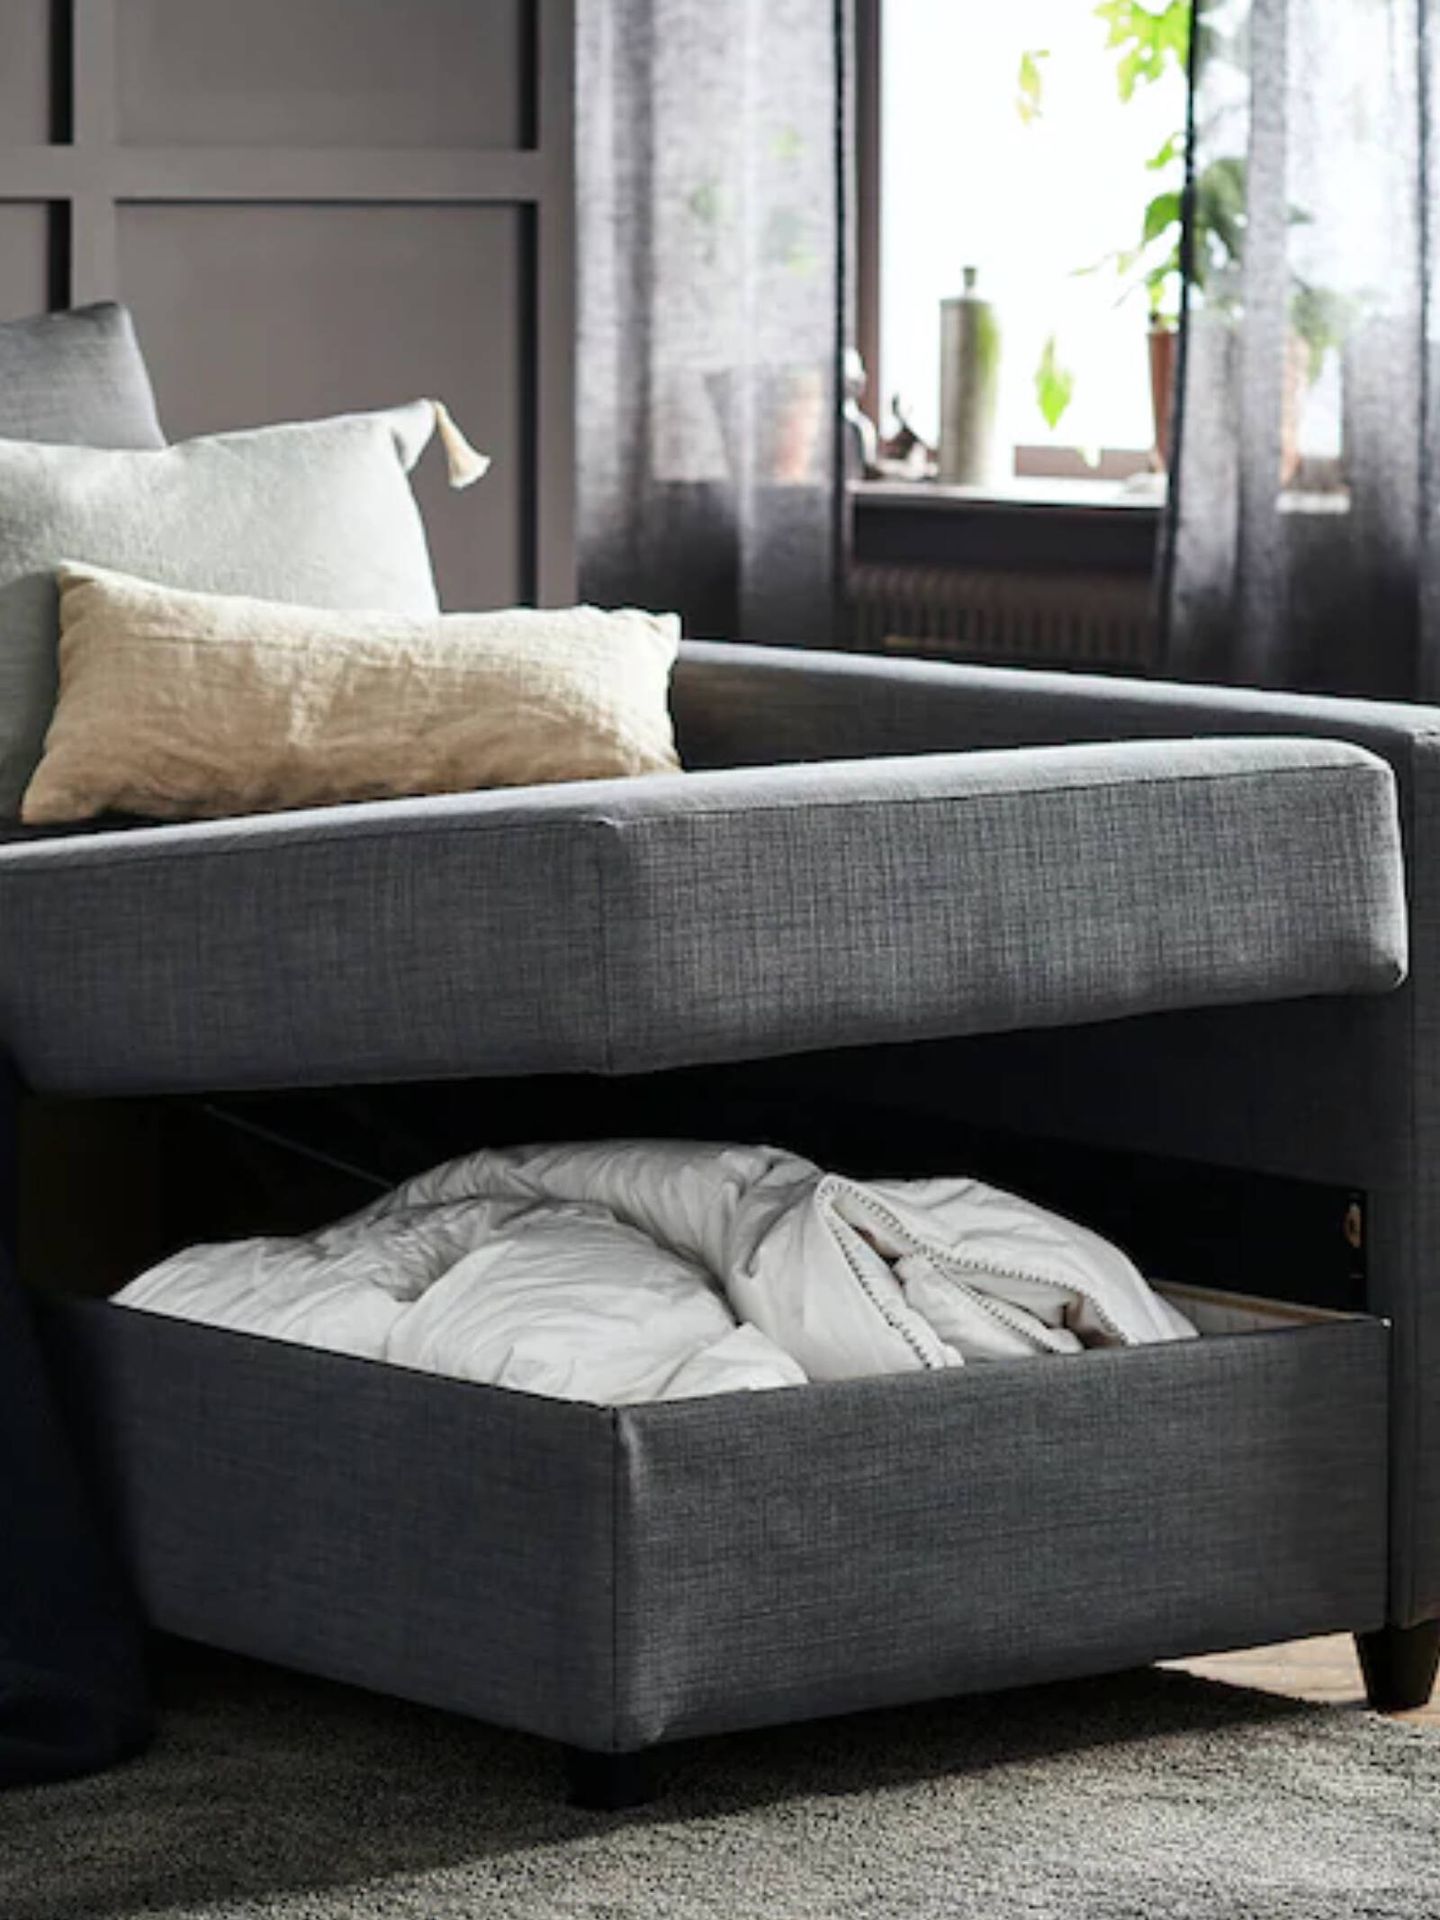 Sofá de Ikea para casas pequeñas, pero ordenadas. (Cortesía/Ikea)